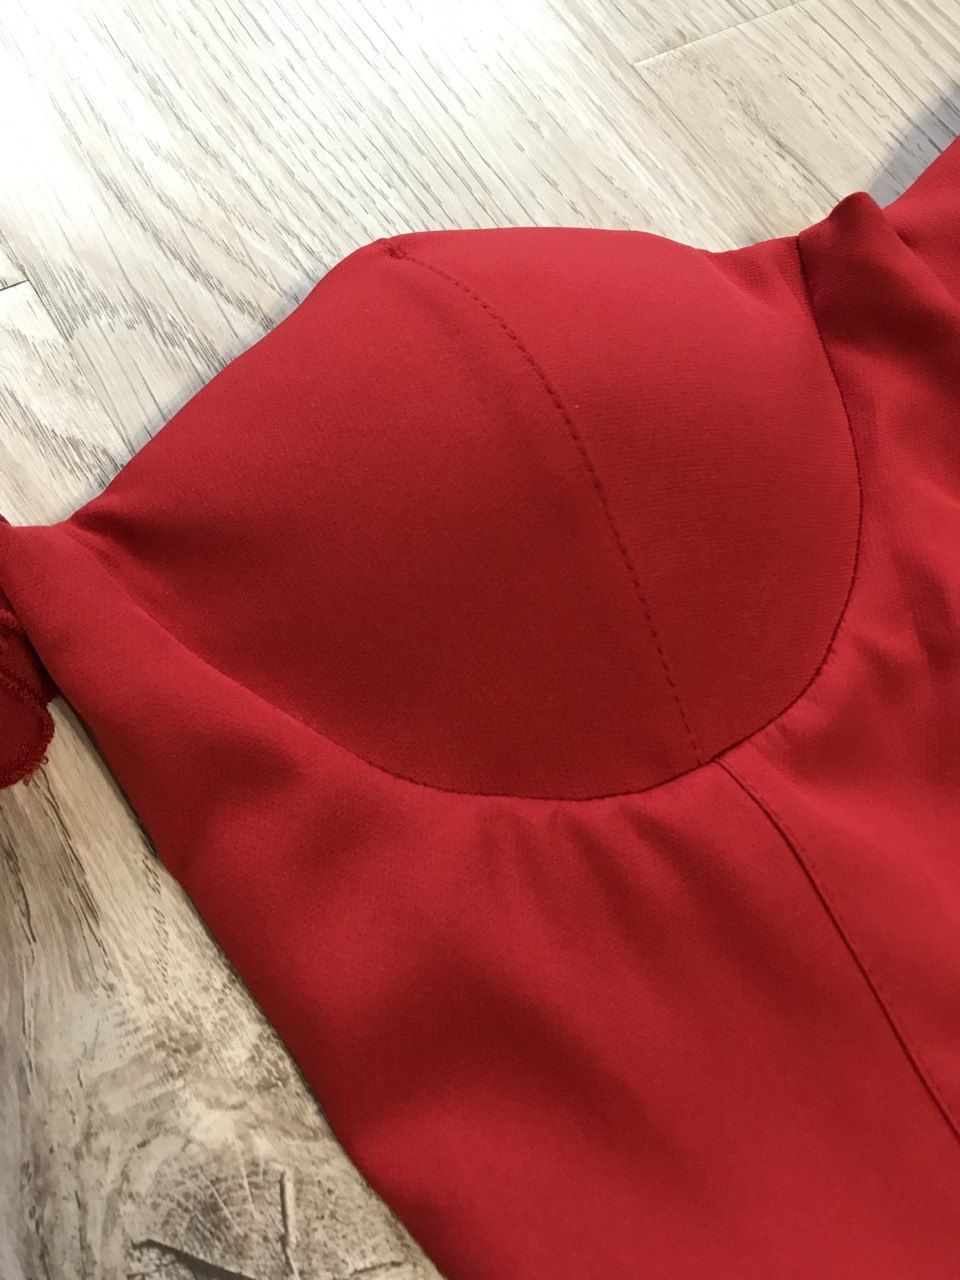 Сукня червона з чашечками